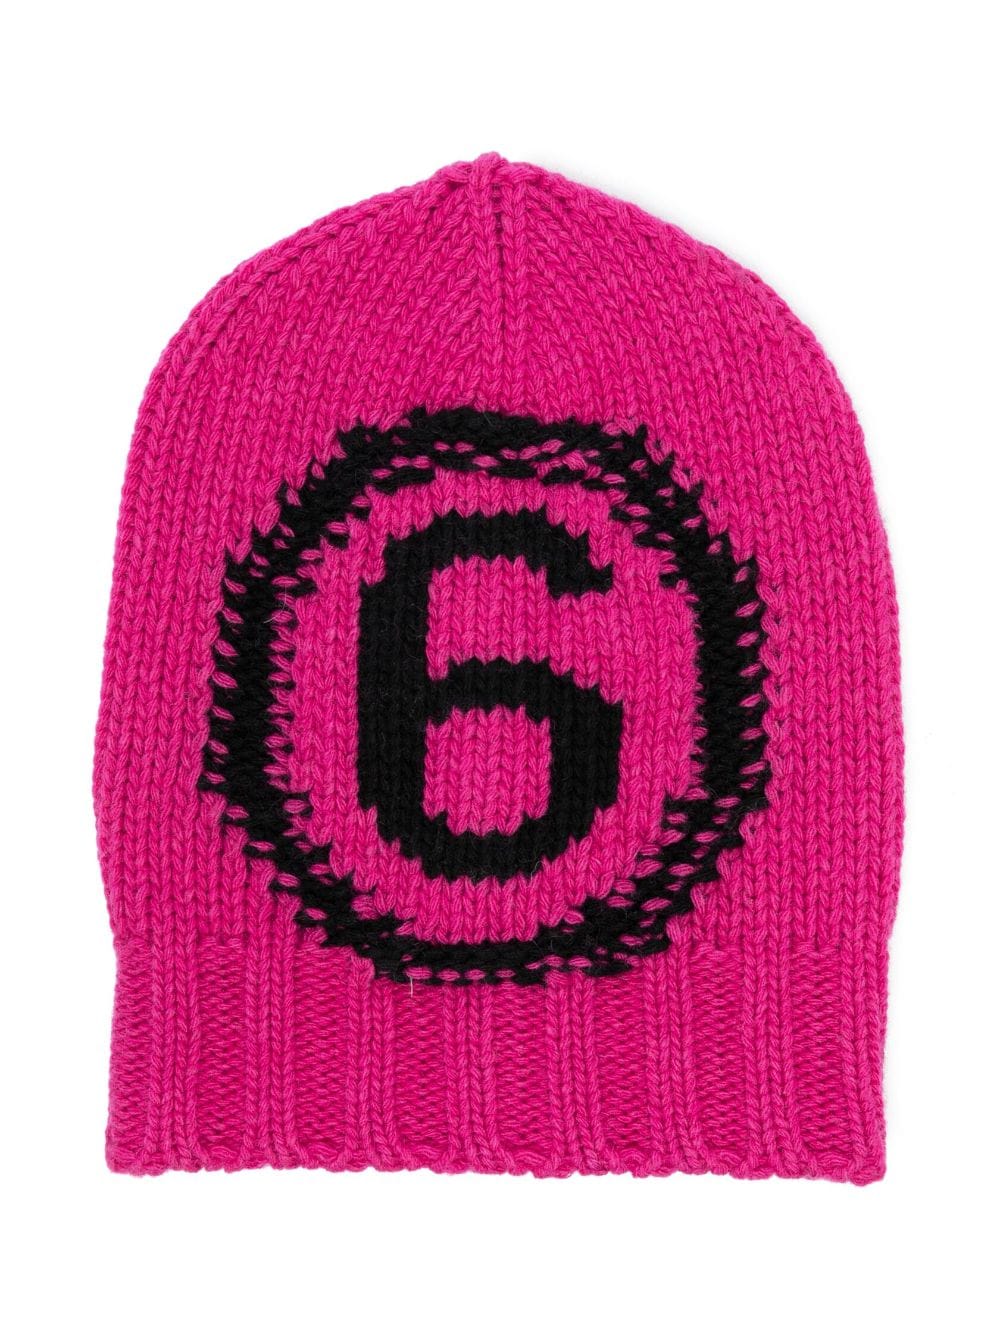 MM6 Maison Margiela Kids intarsia-knit logo beanie hat - Pink